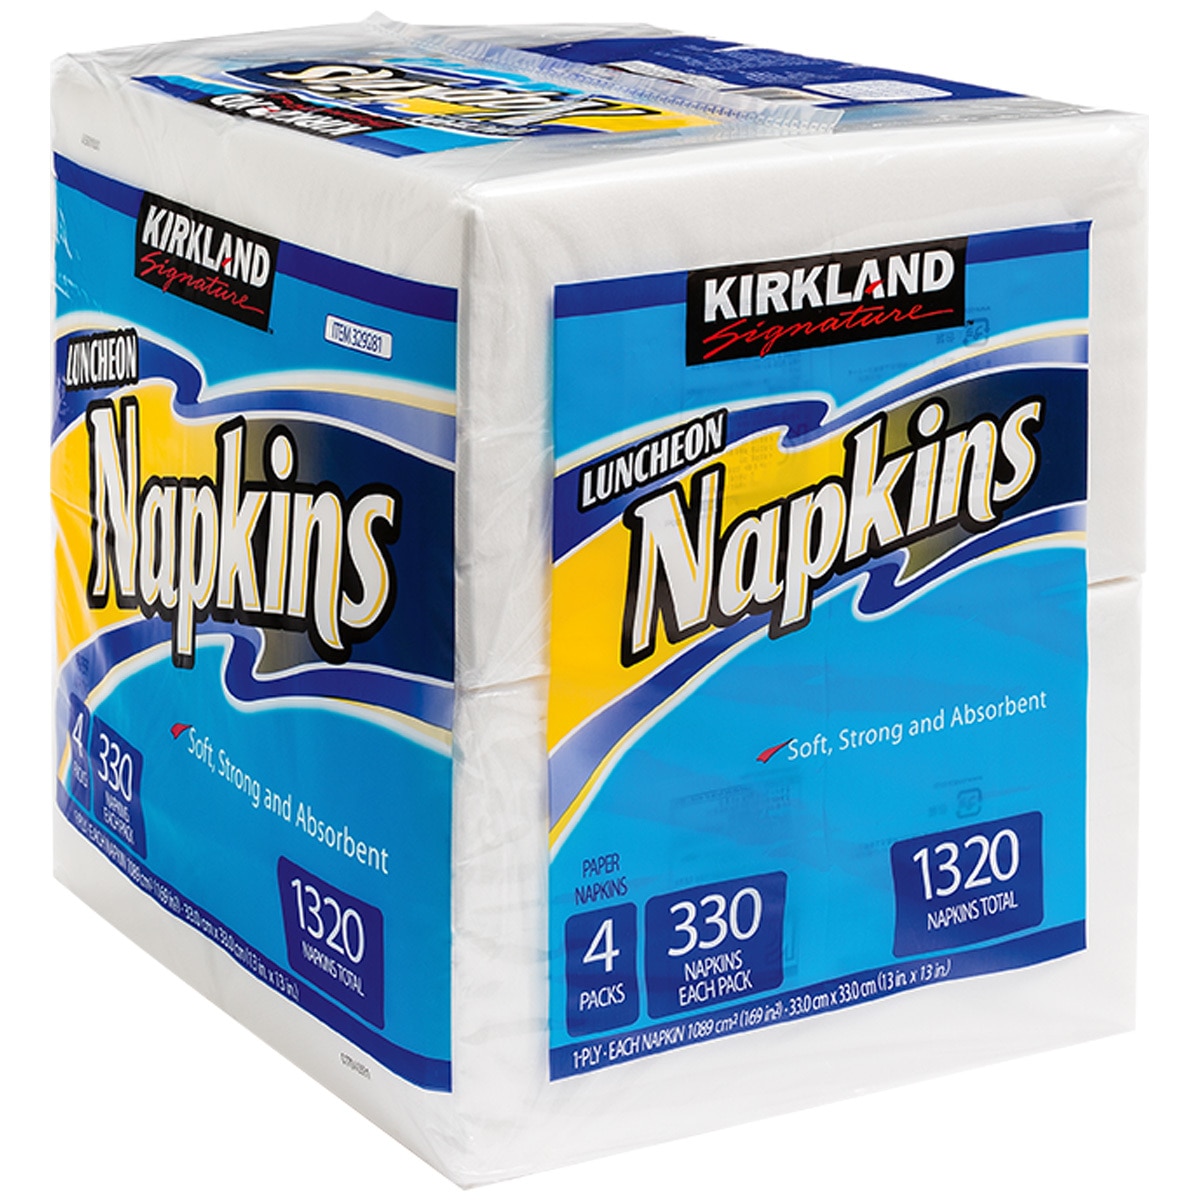 Kirkland Signature Napkins 4x330 sheets